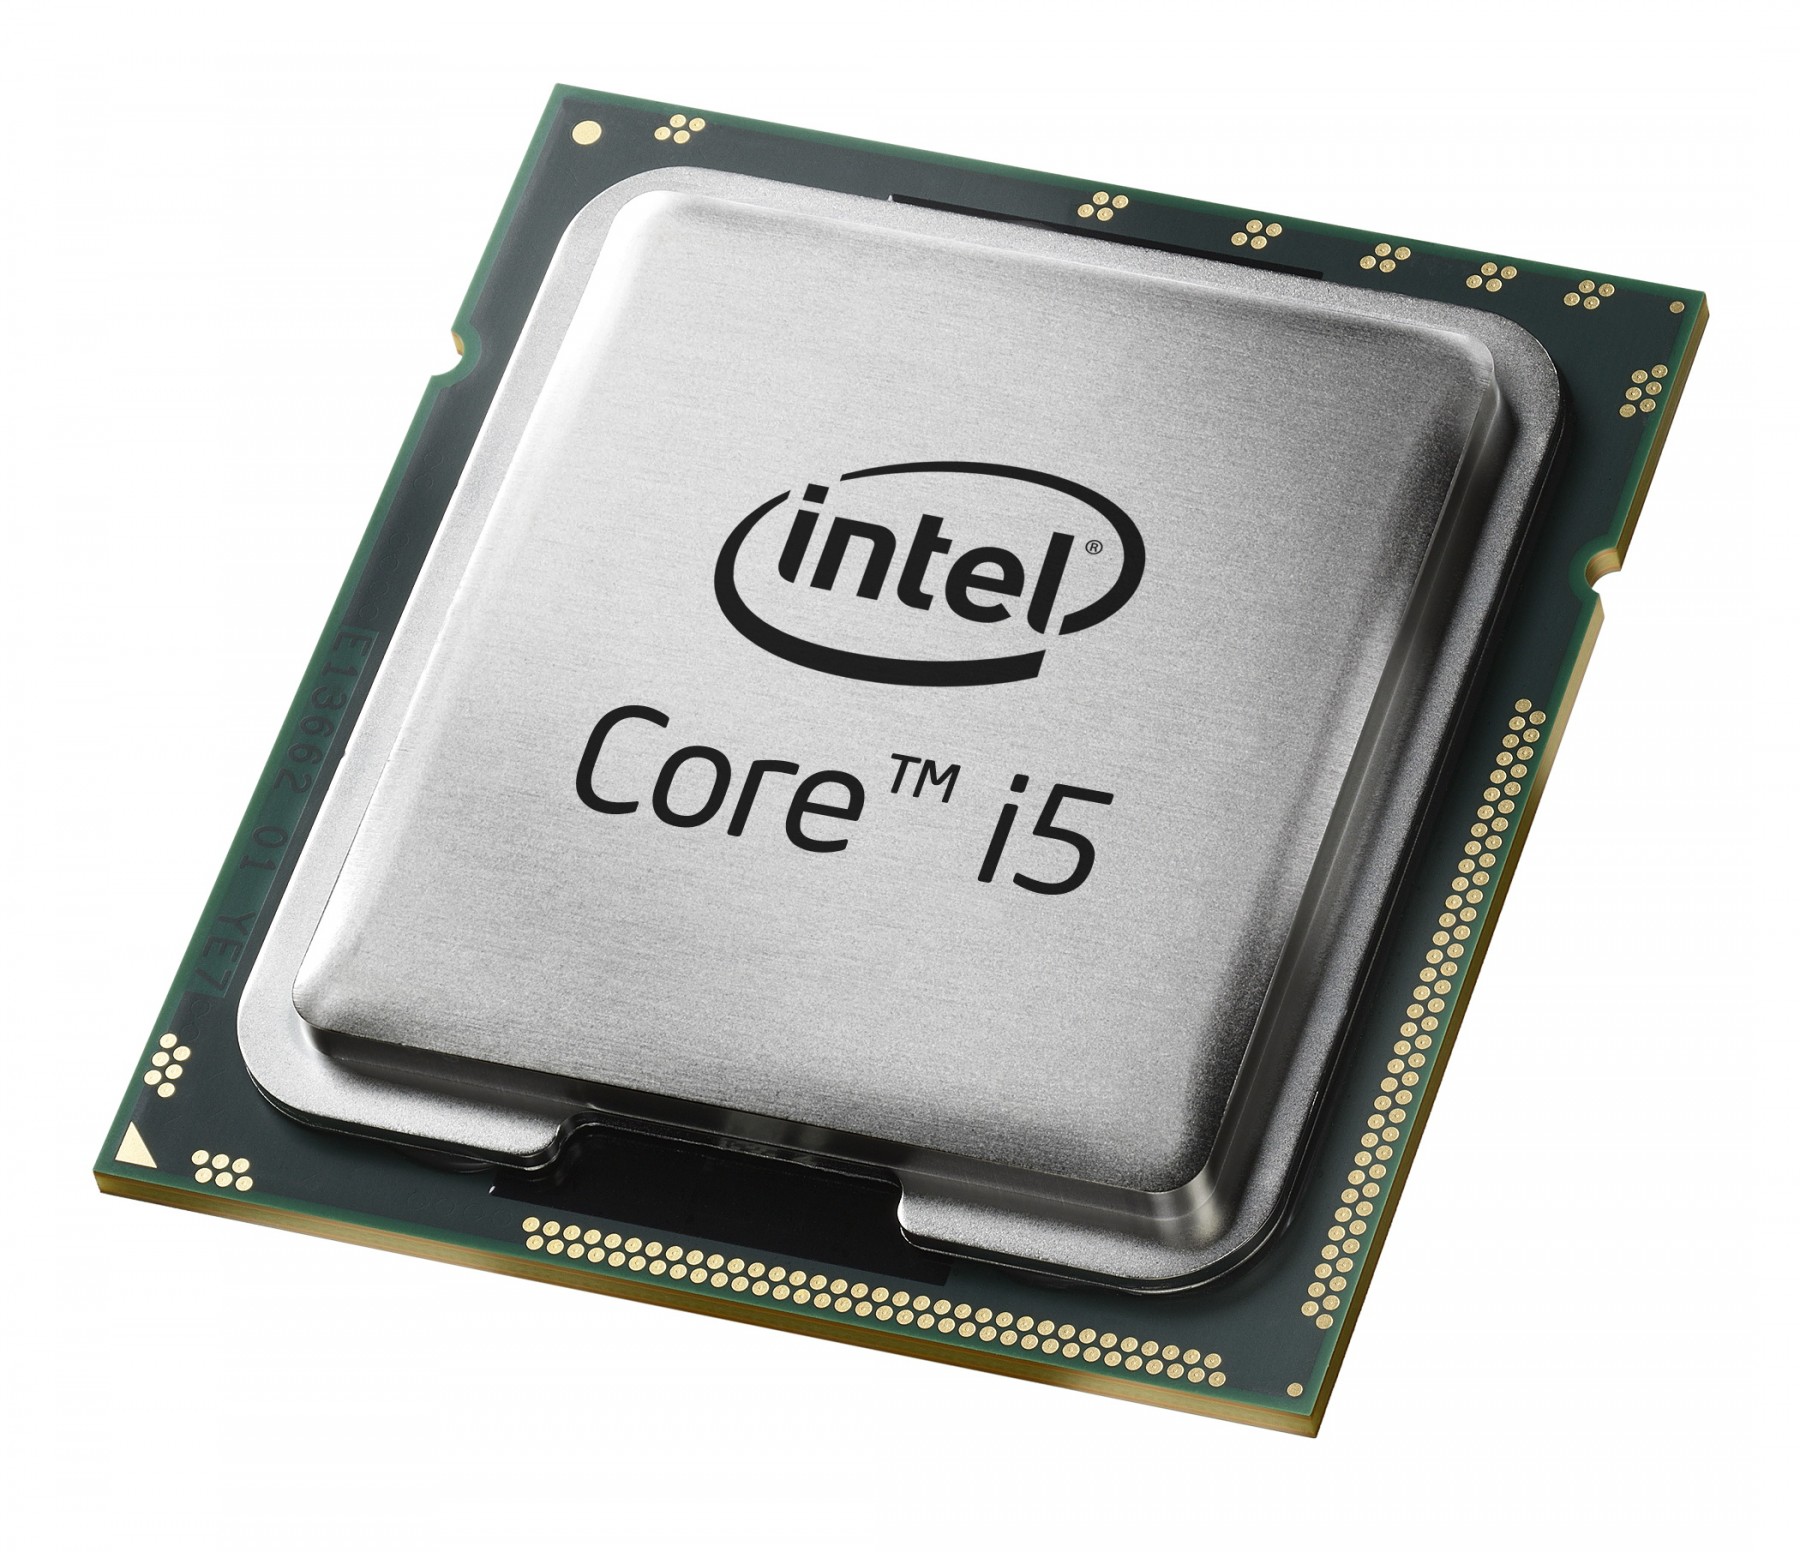 500030387-Intel Core i5-4258U SR189 2.6Ghz 5GT/s BGA 1168 Processor-image